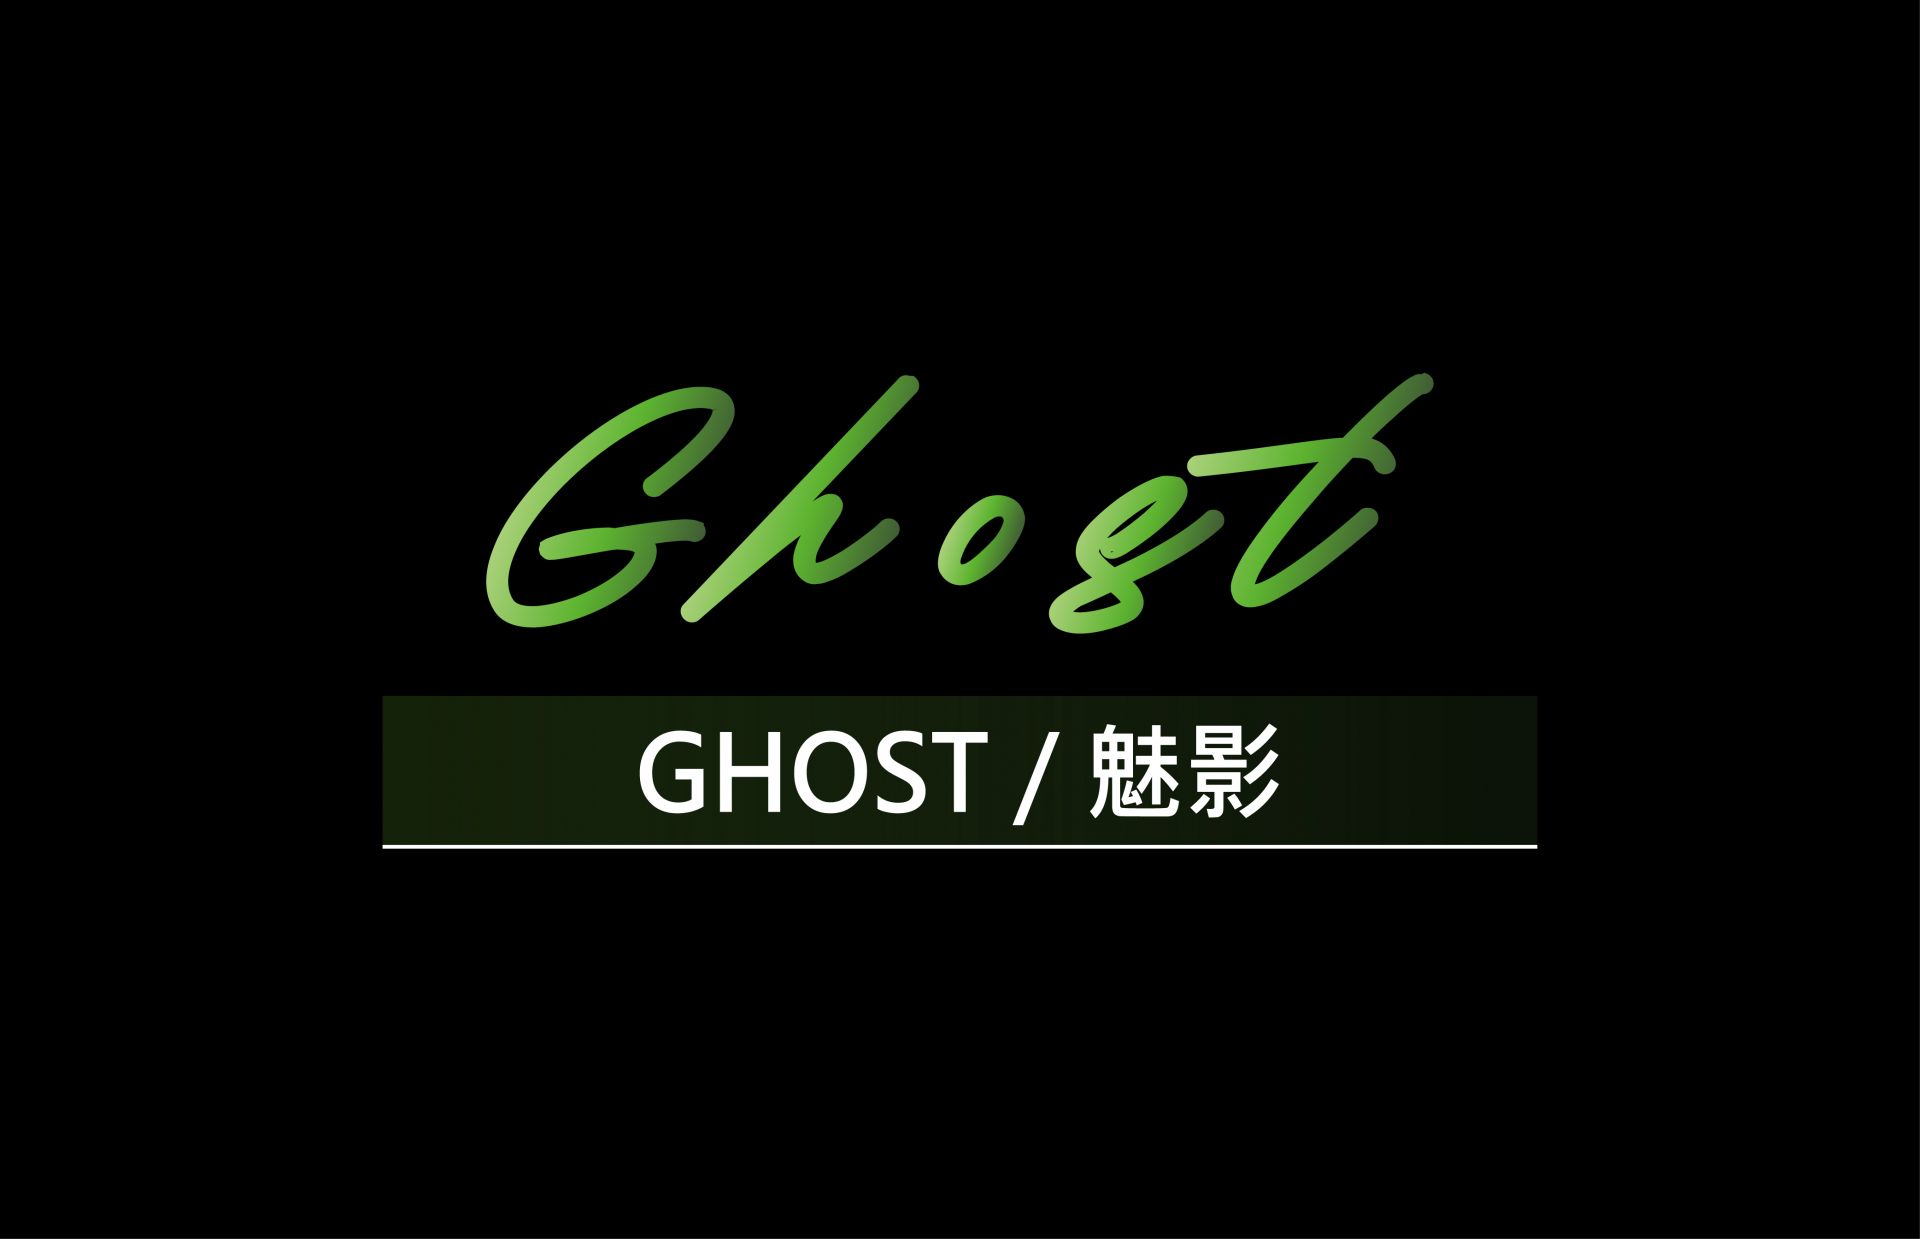 GHOST / 魅影